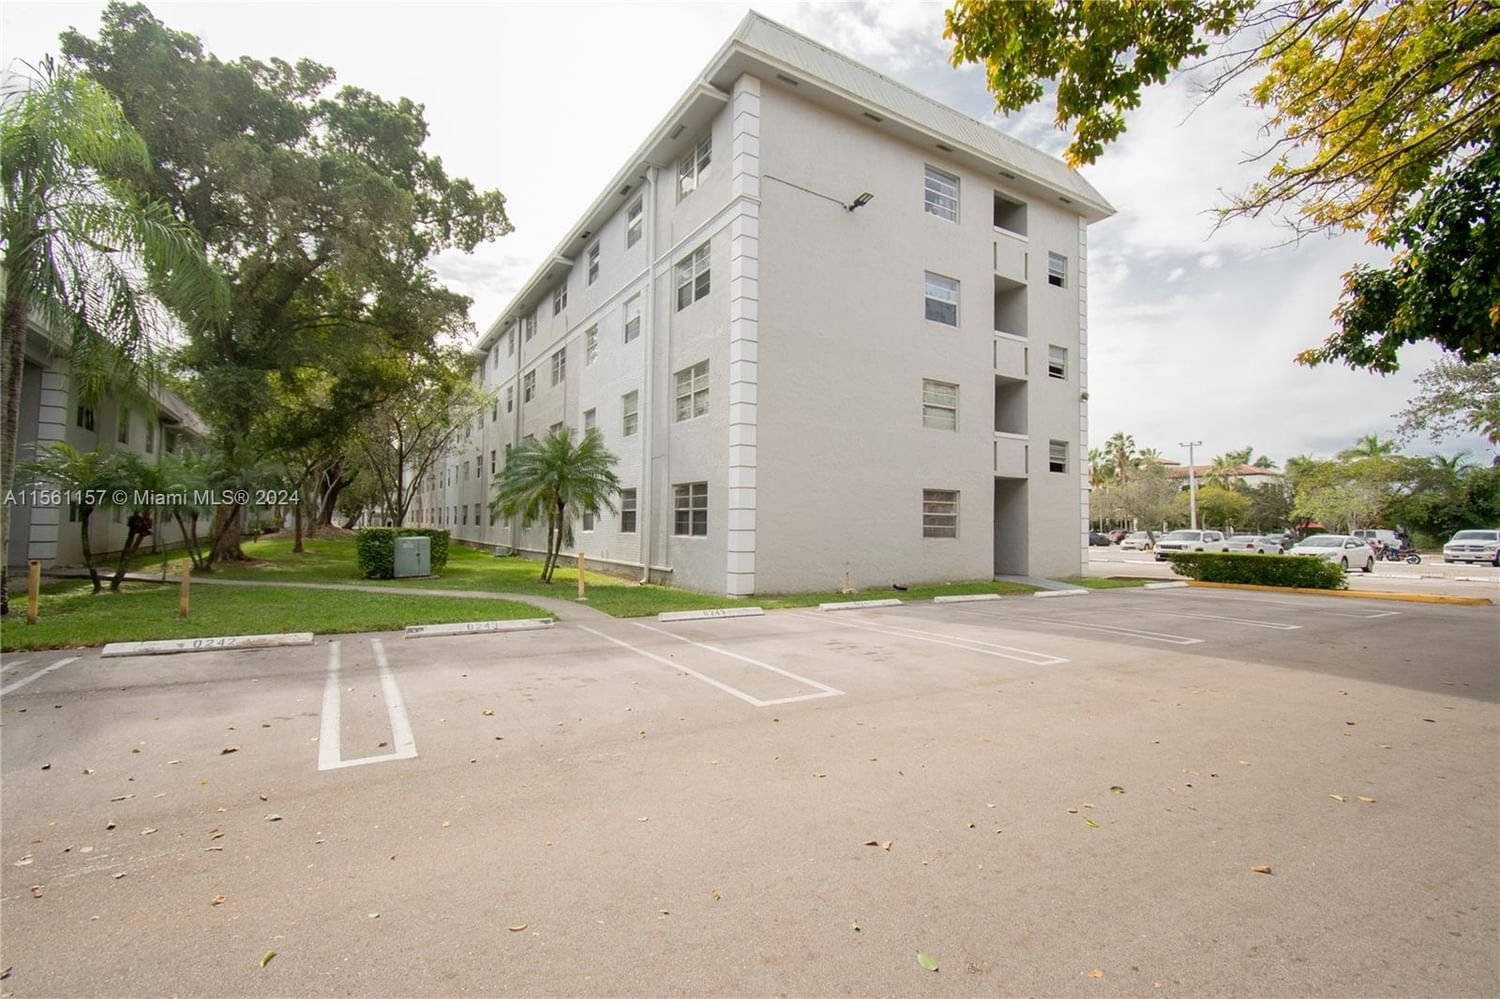 Real estate property located at 17255 95th Ave #457, Miami-Dade County, VILLAGE HOMES & CONDOS, Palmetto Bay, FL